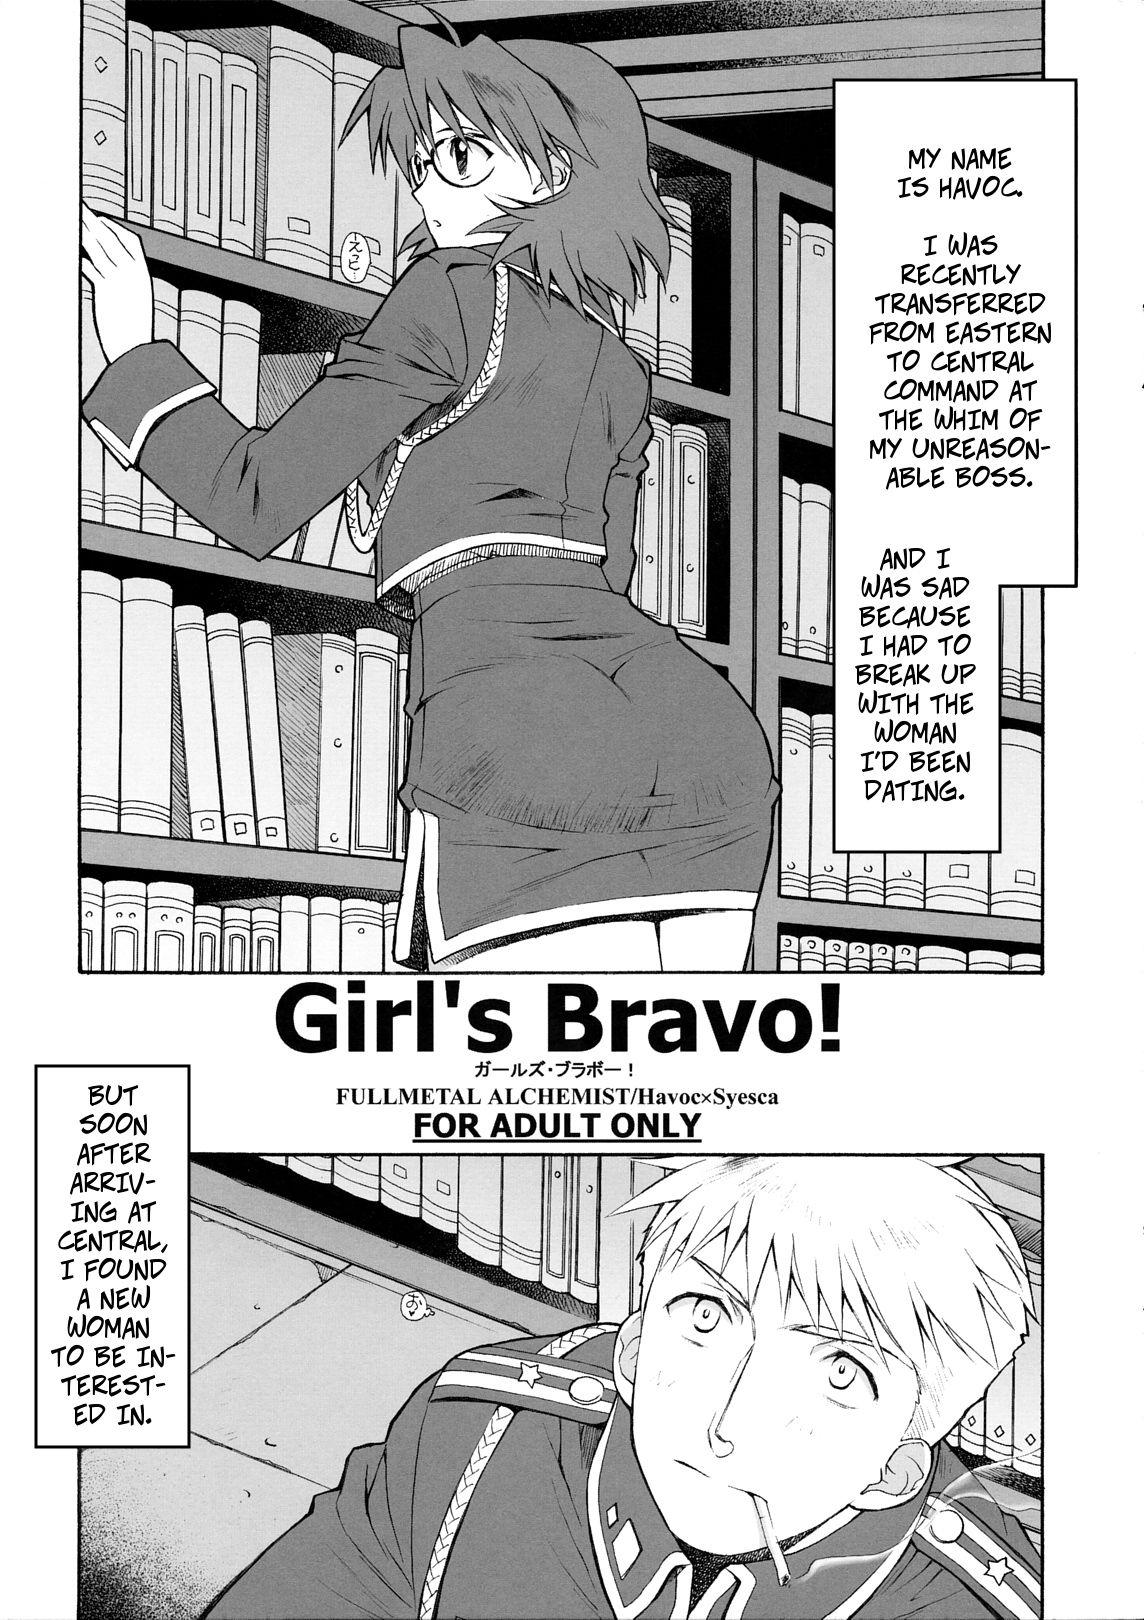 Hood Girl's Bravo! - Fullmetal alchemist Big Penis - Picture 1